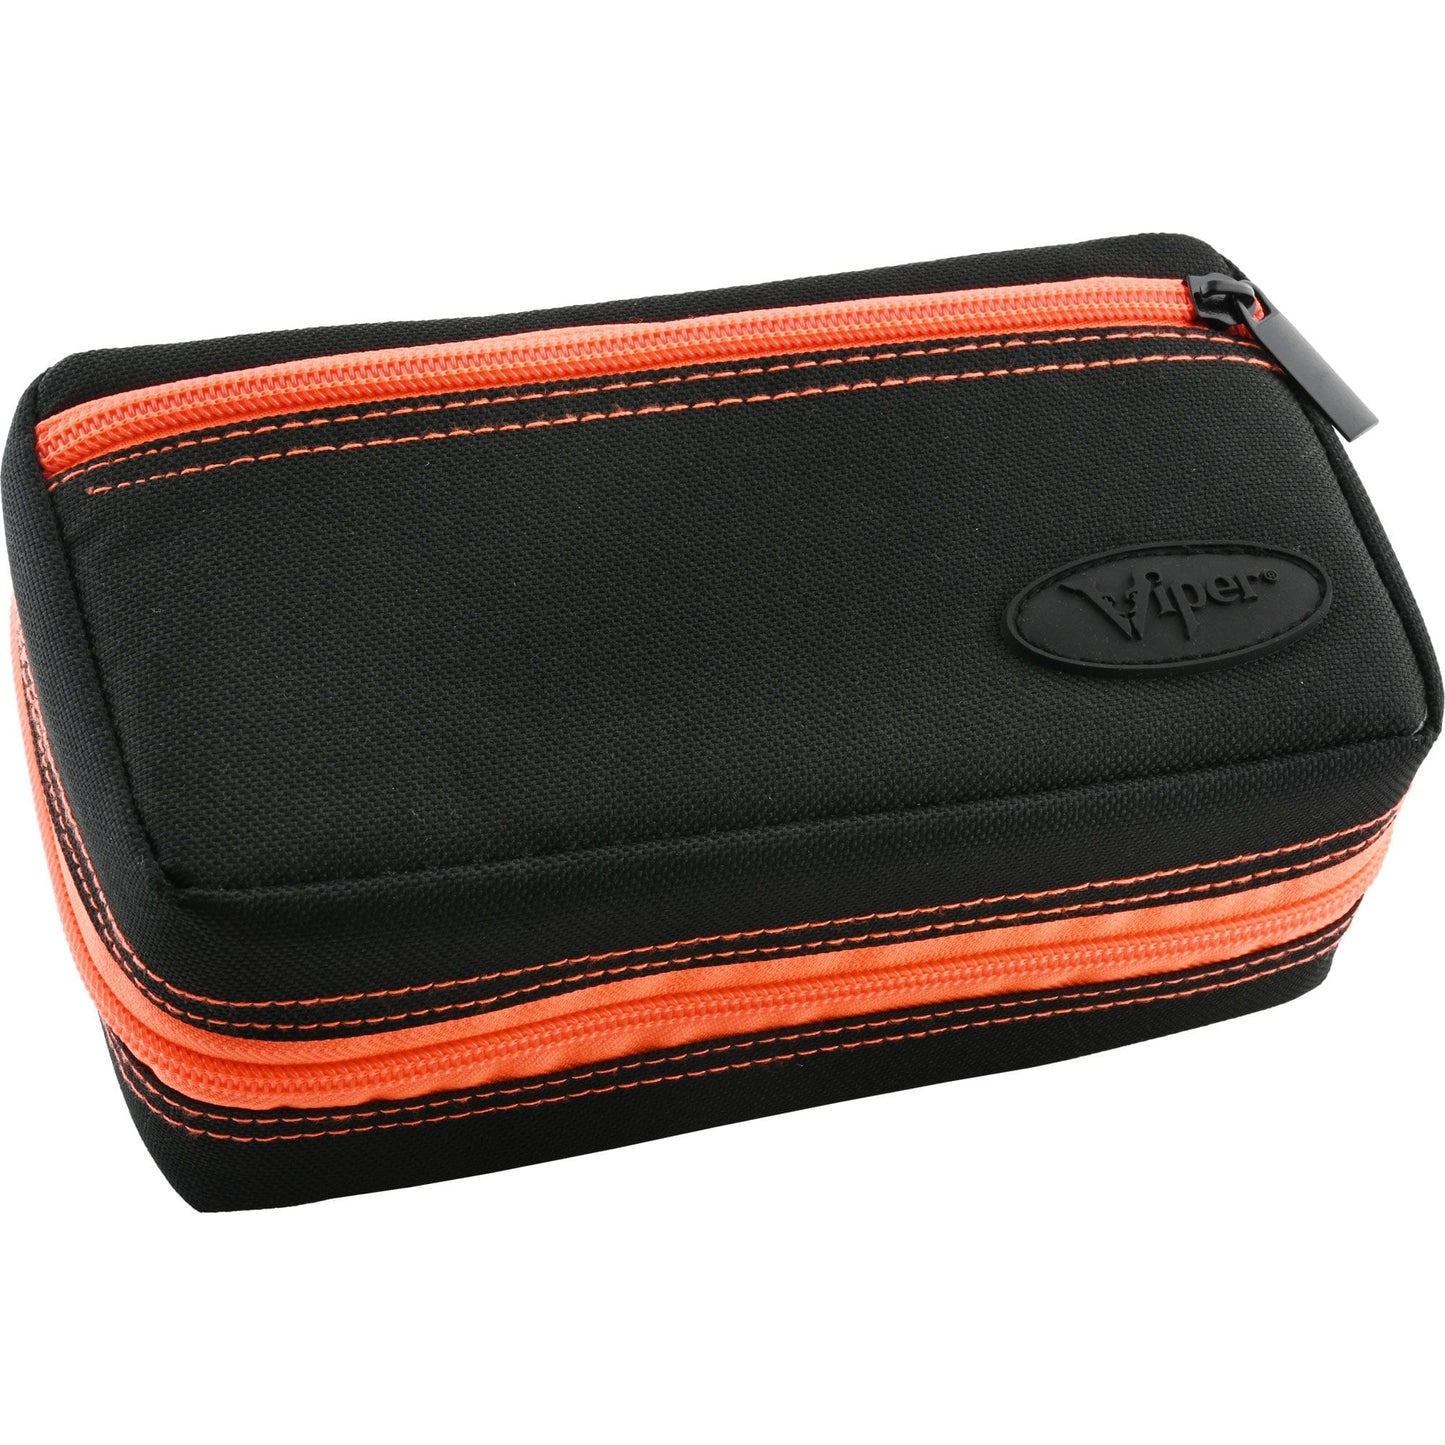 Viper Plazma Pro Dart Case - Extremely Tough & Durable Orange